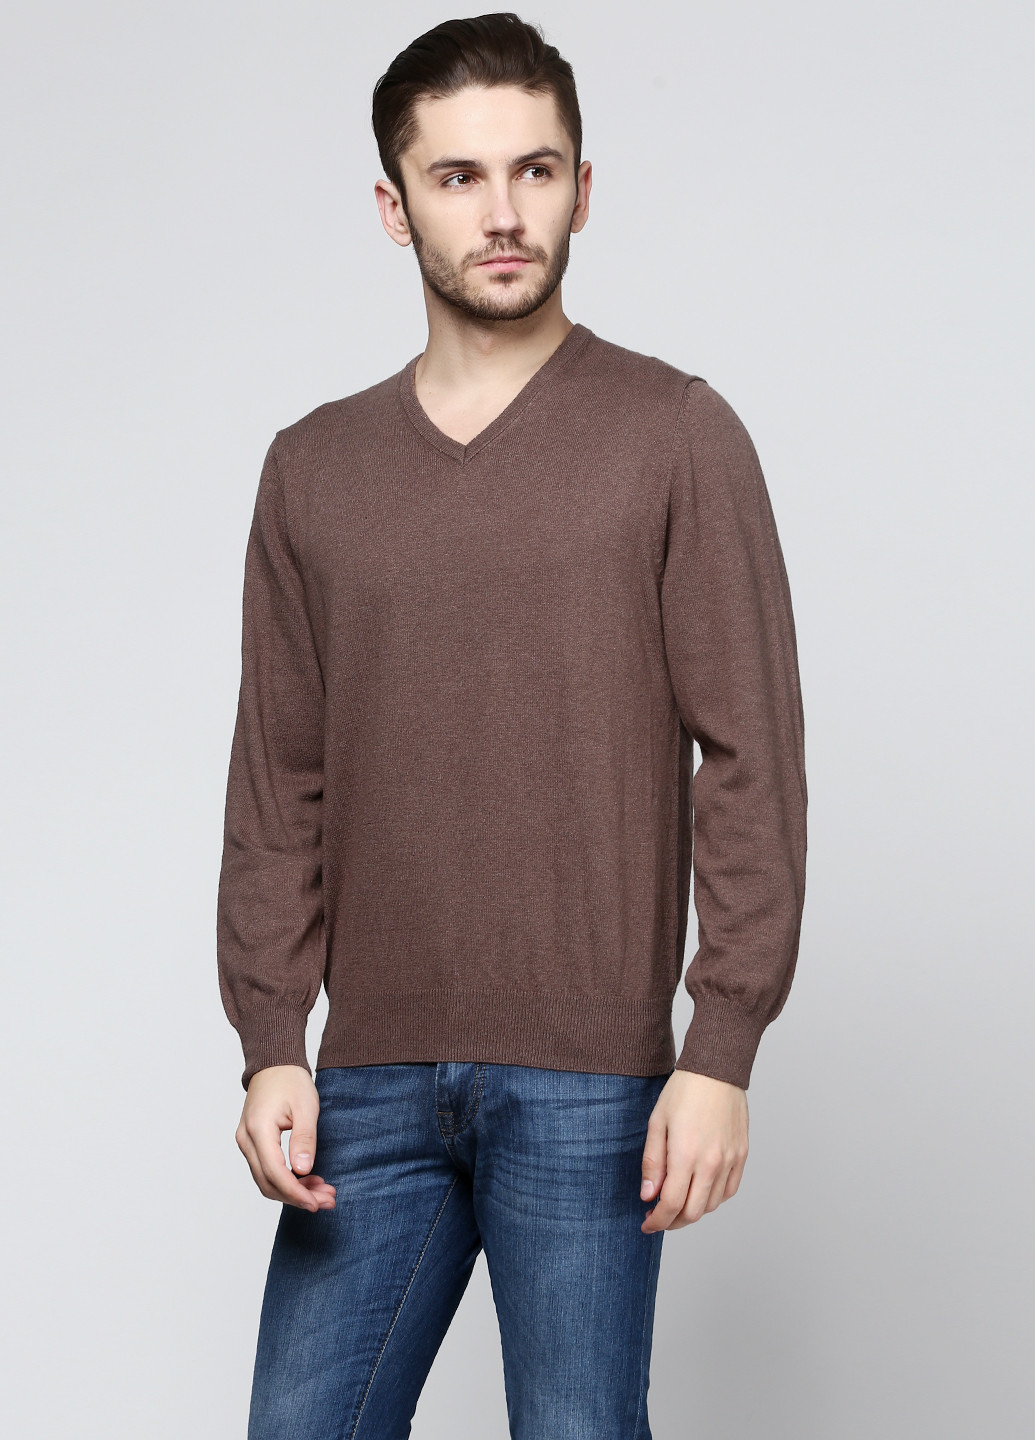 Коричневый демисезонный пуловер пуловер Magliere Di Perugia